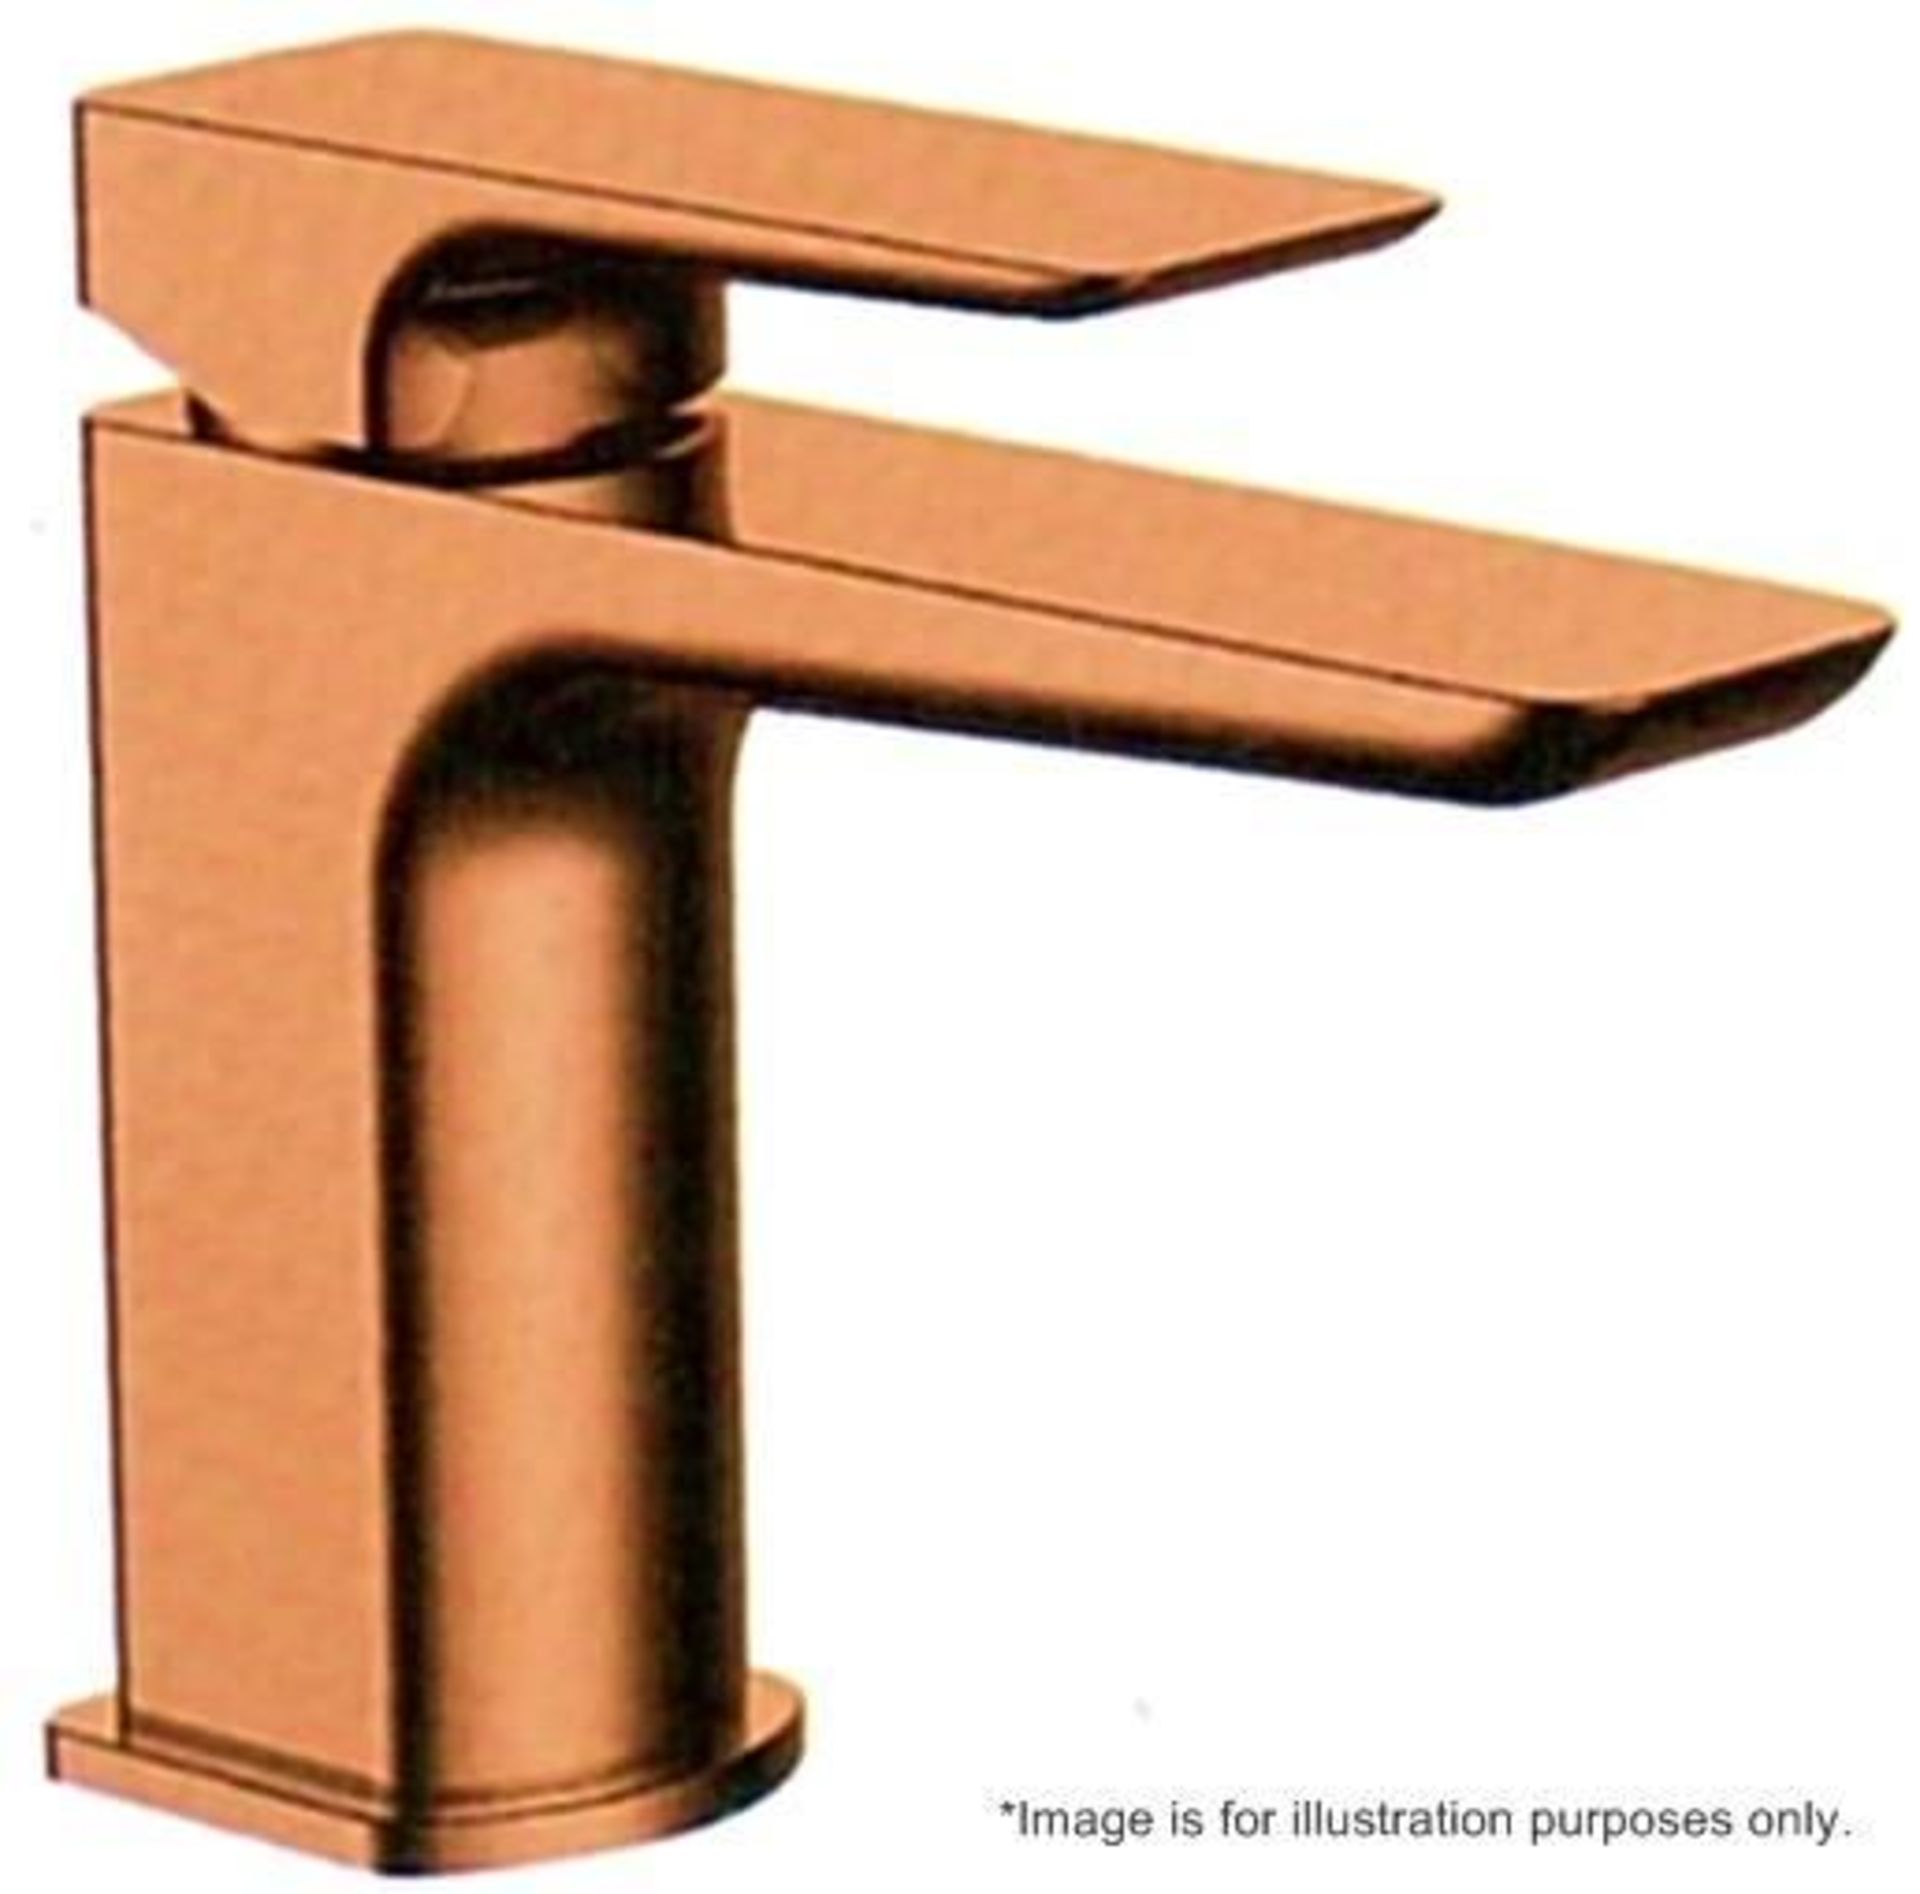 1 x Utopia Bathrooms Divine Basin Monobloc Mixer - Luxury Brassware With An Elegant Copper Finish -